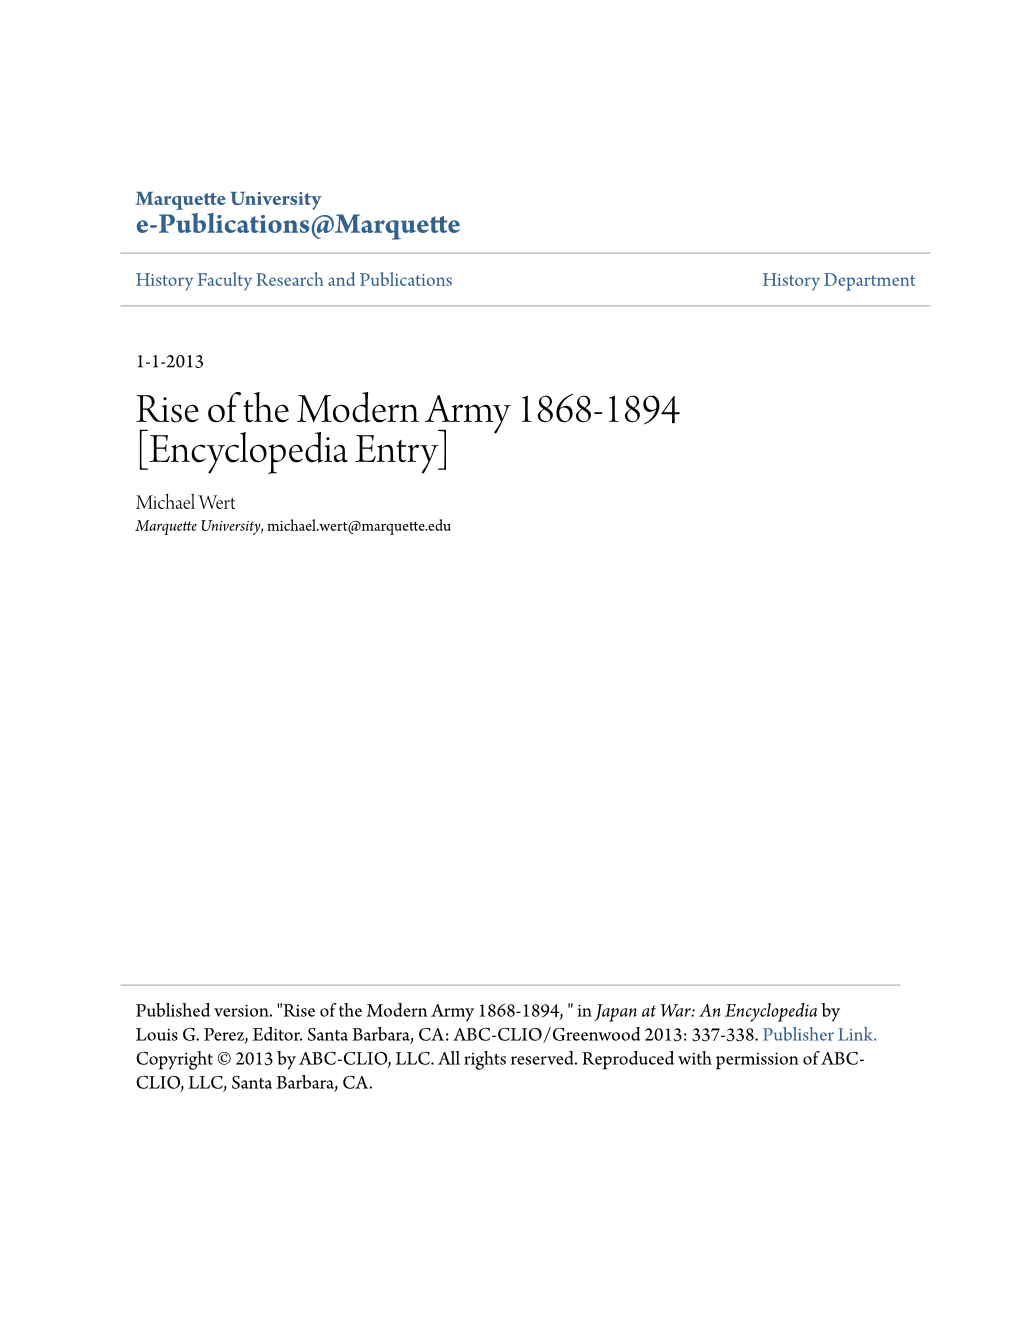 Rise of the Modern Army 1868-1894 [Encyclopedia Entry] Michael Wert Marquette University, Michael.Wert@Marquette.Edu